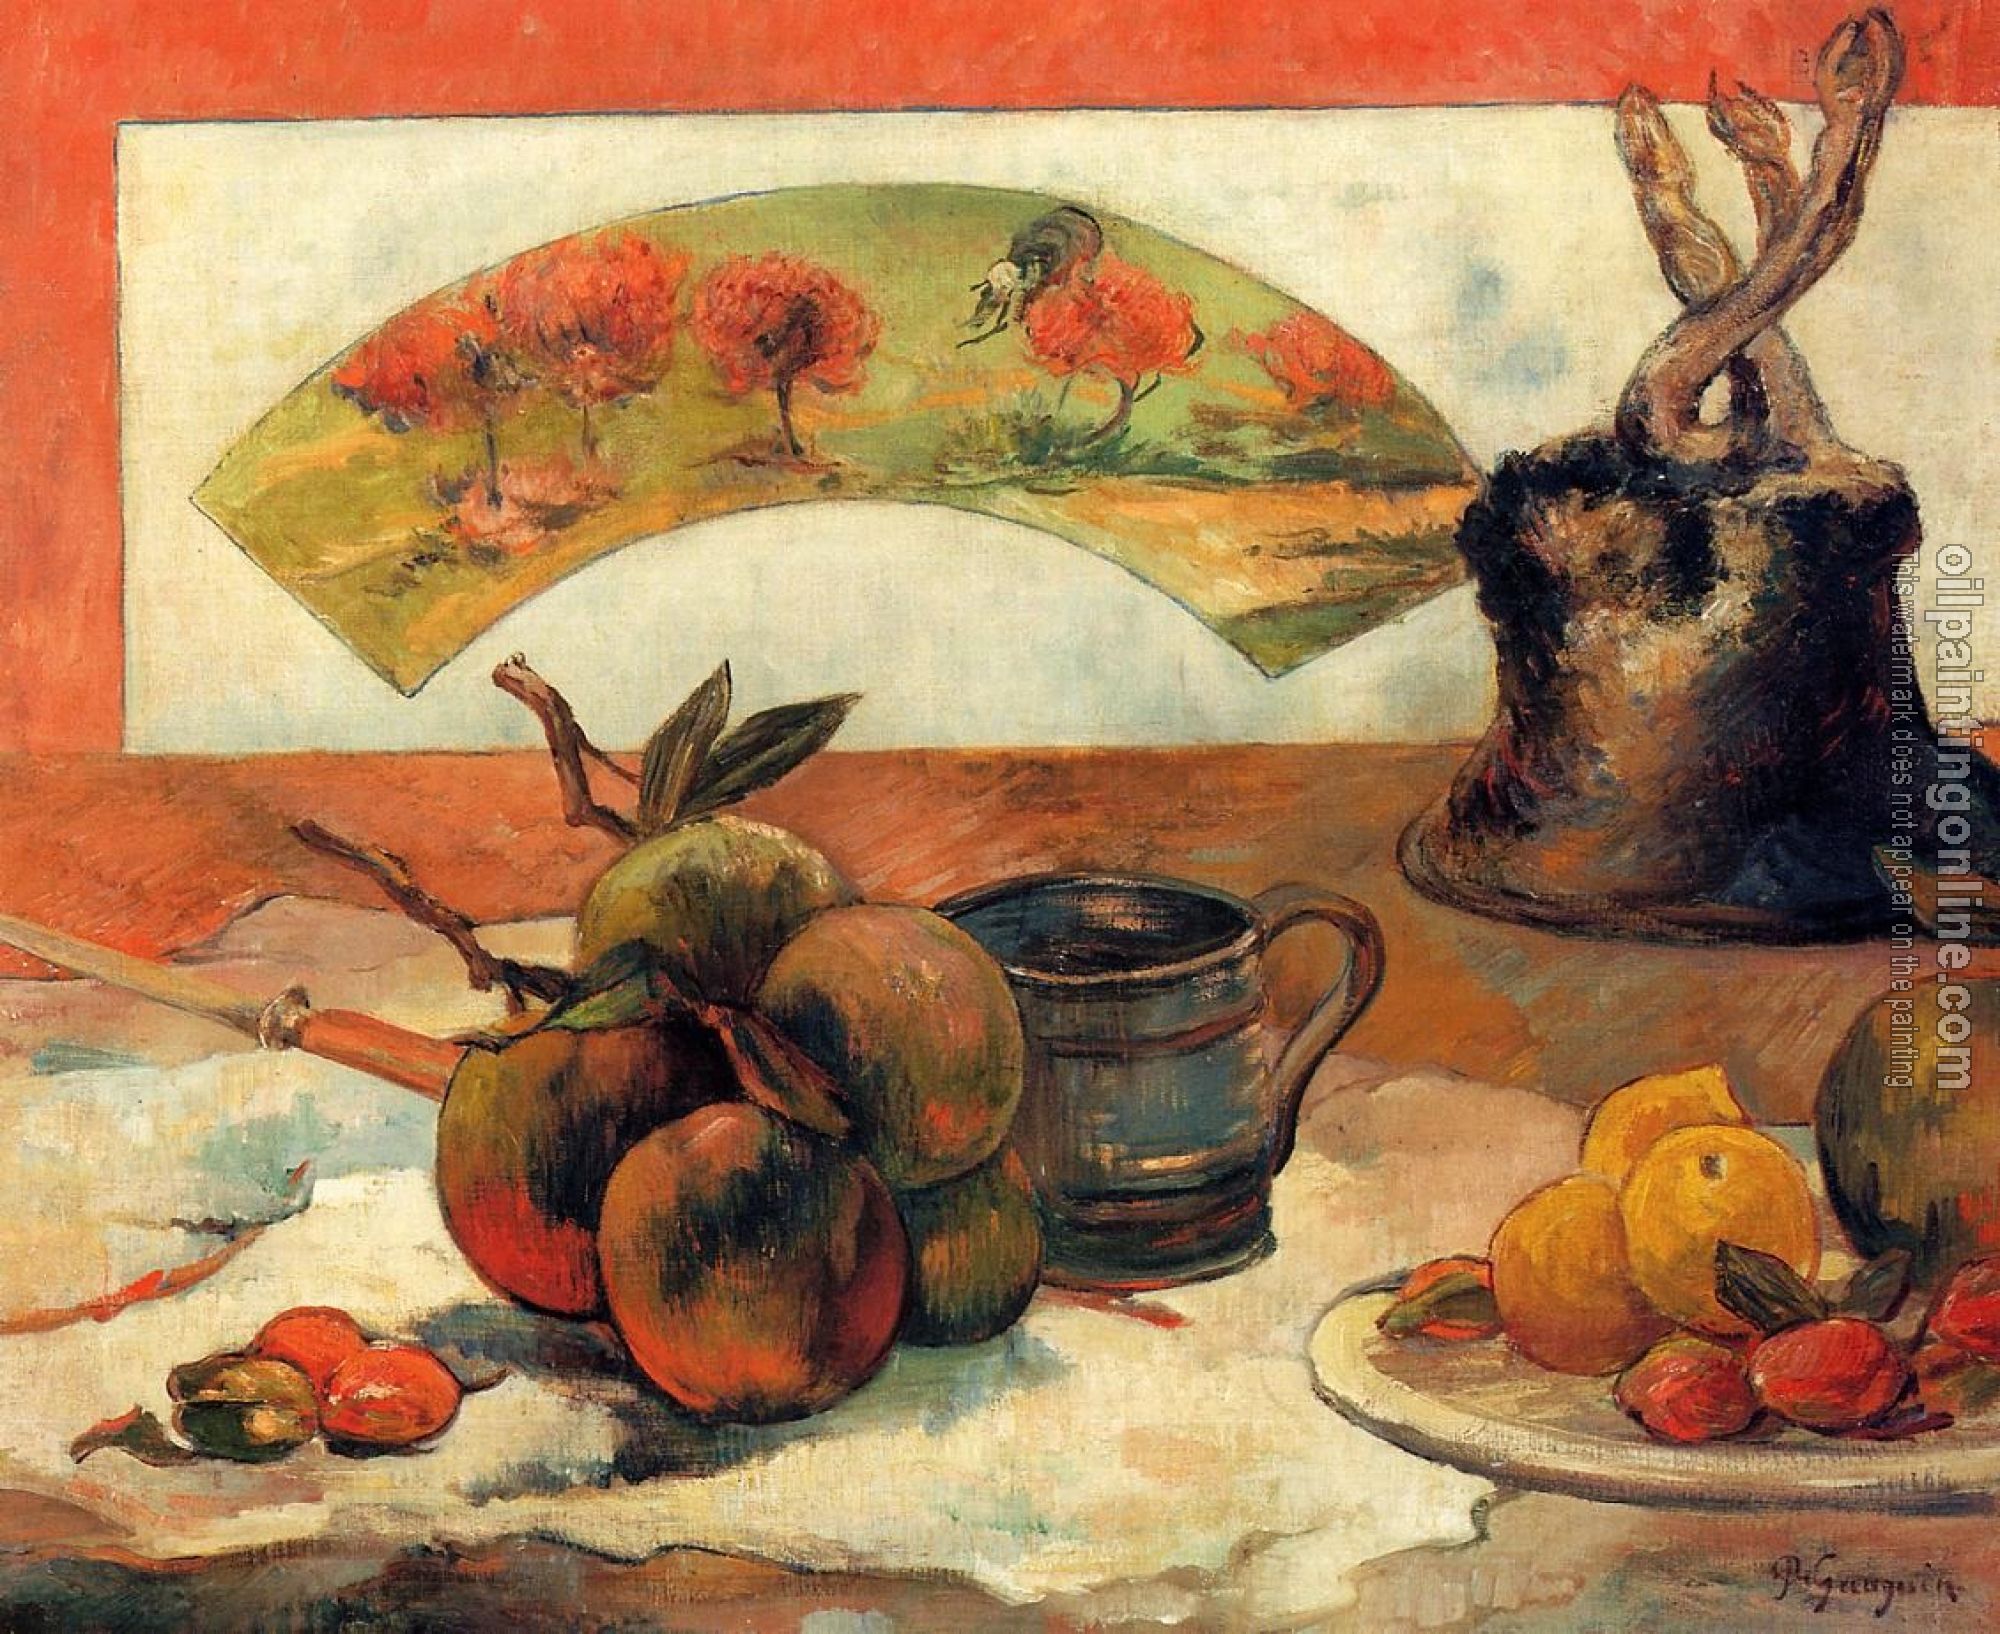 Gauguin, Paul - Still Life with Fan